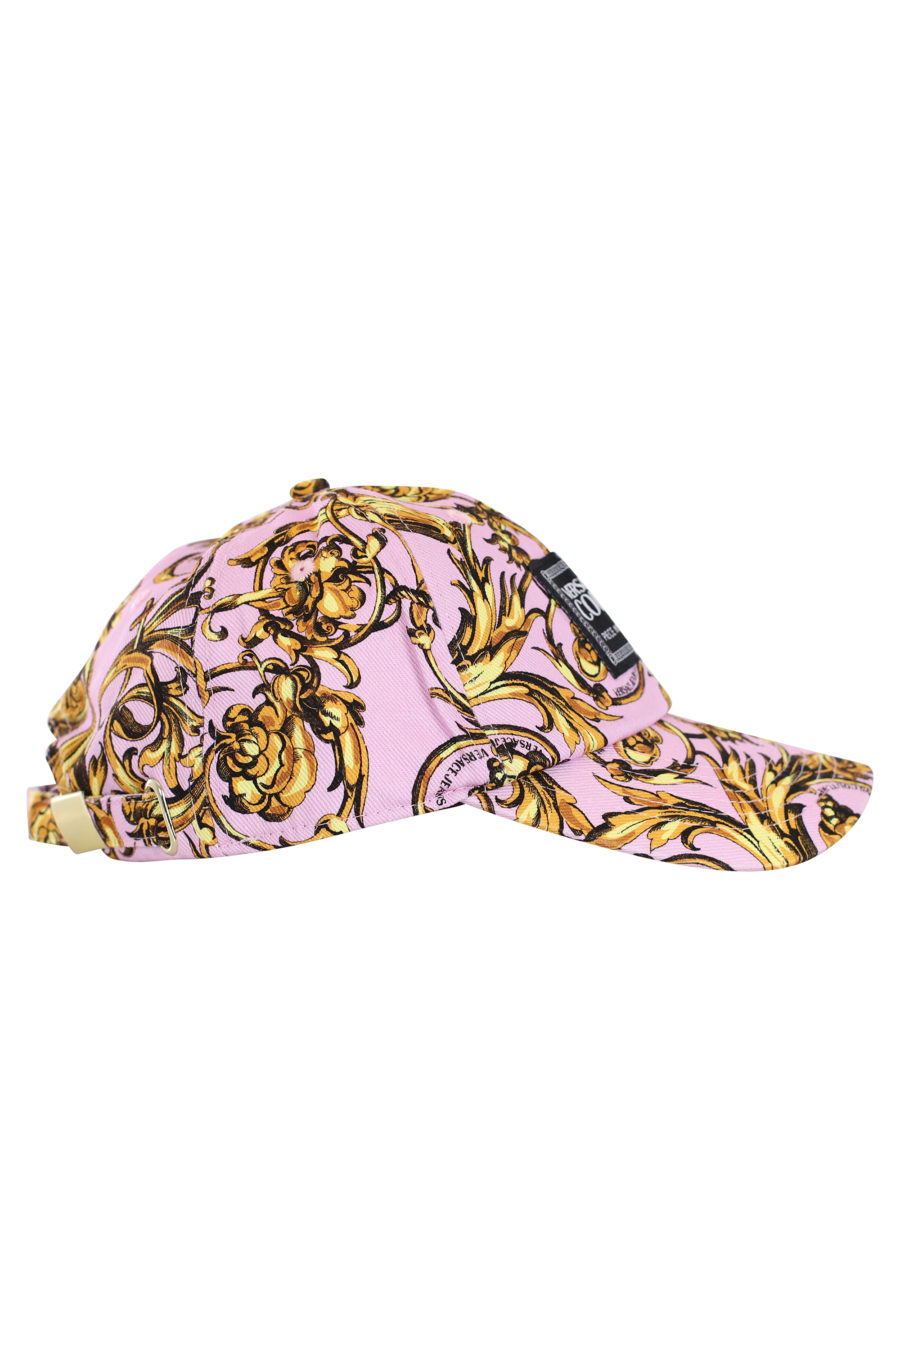 Gorra lila con estampado barroco dorado - IMG 0151